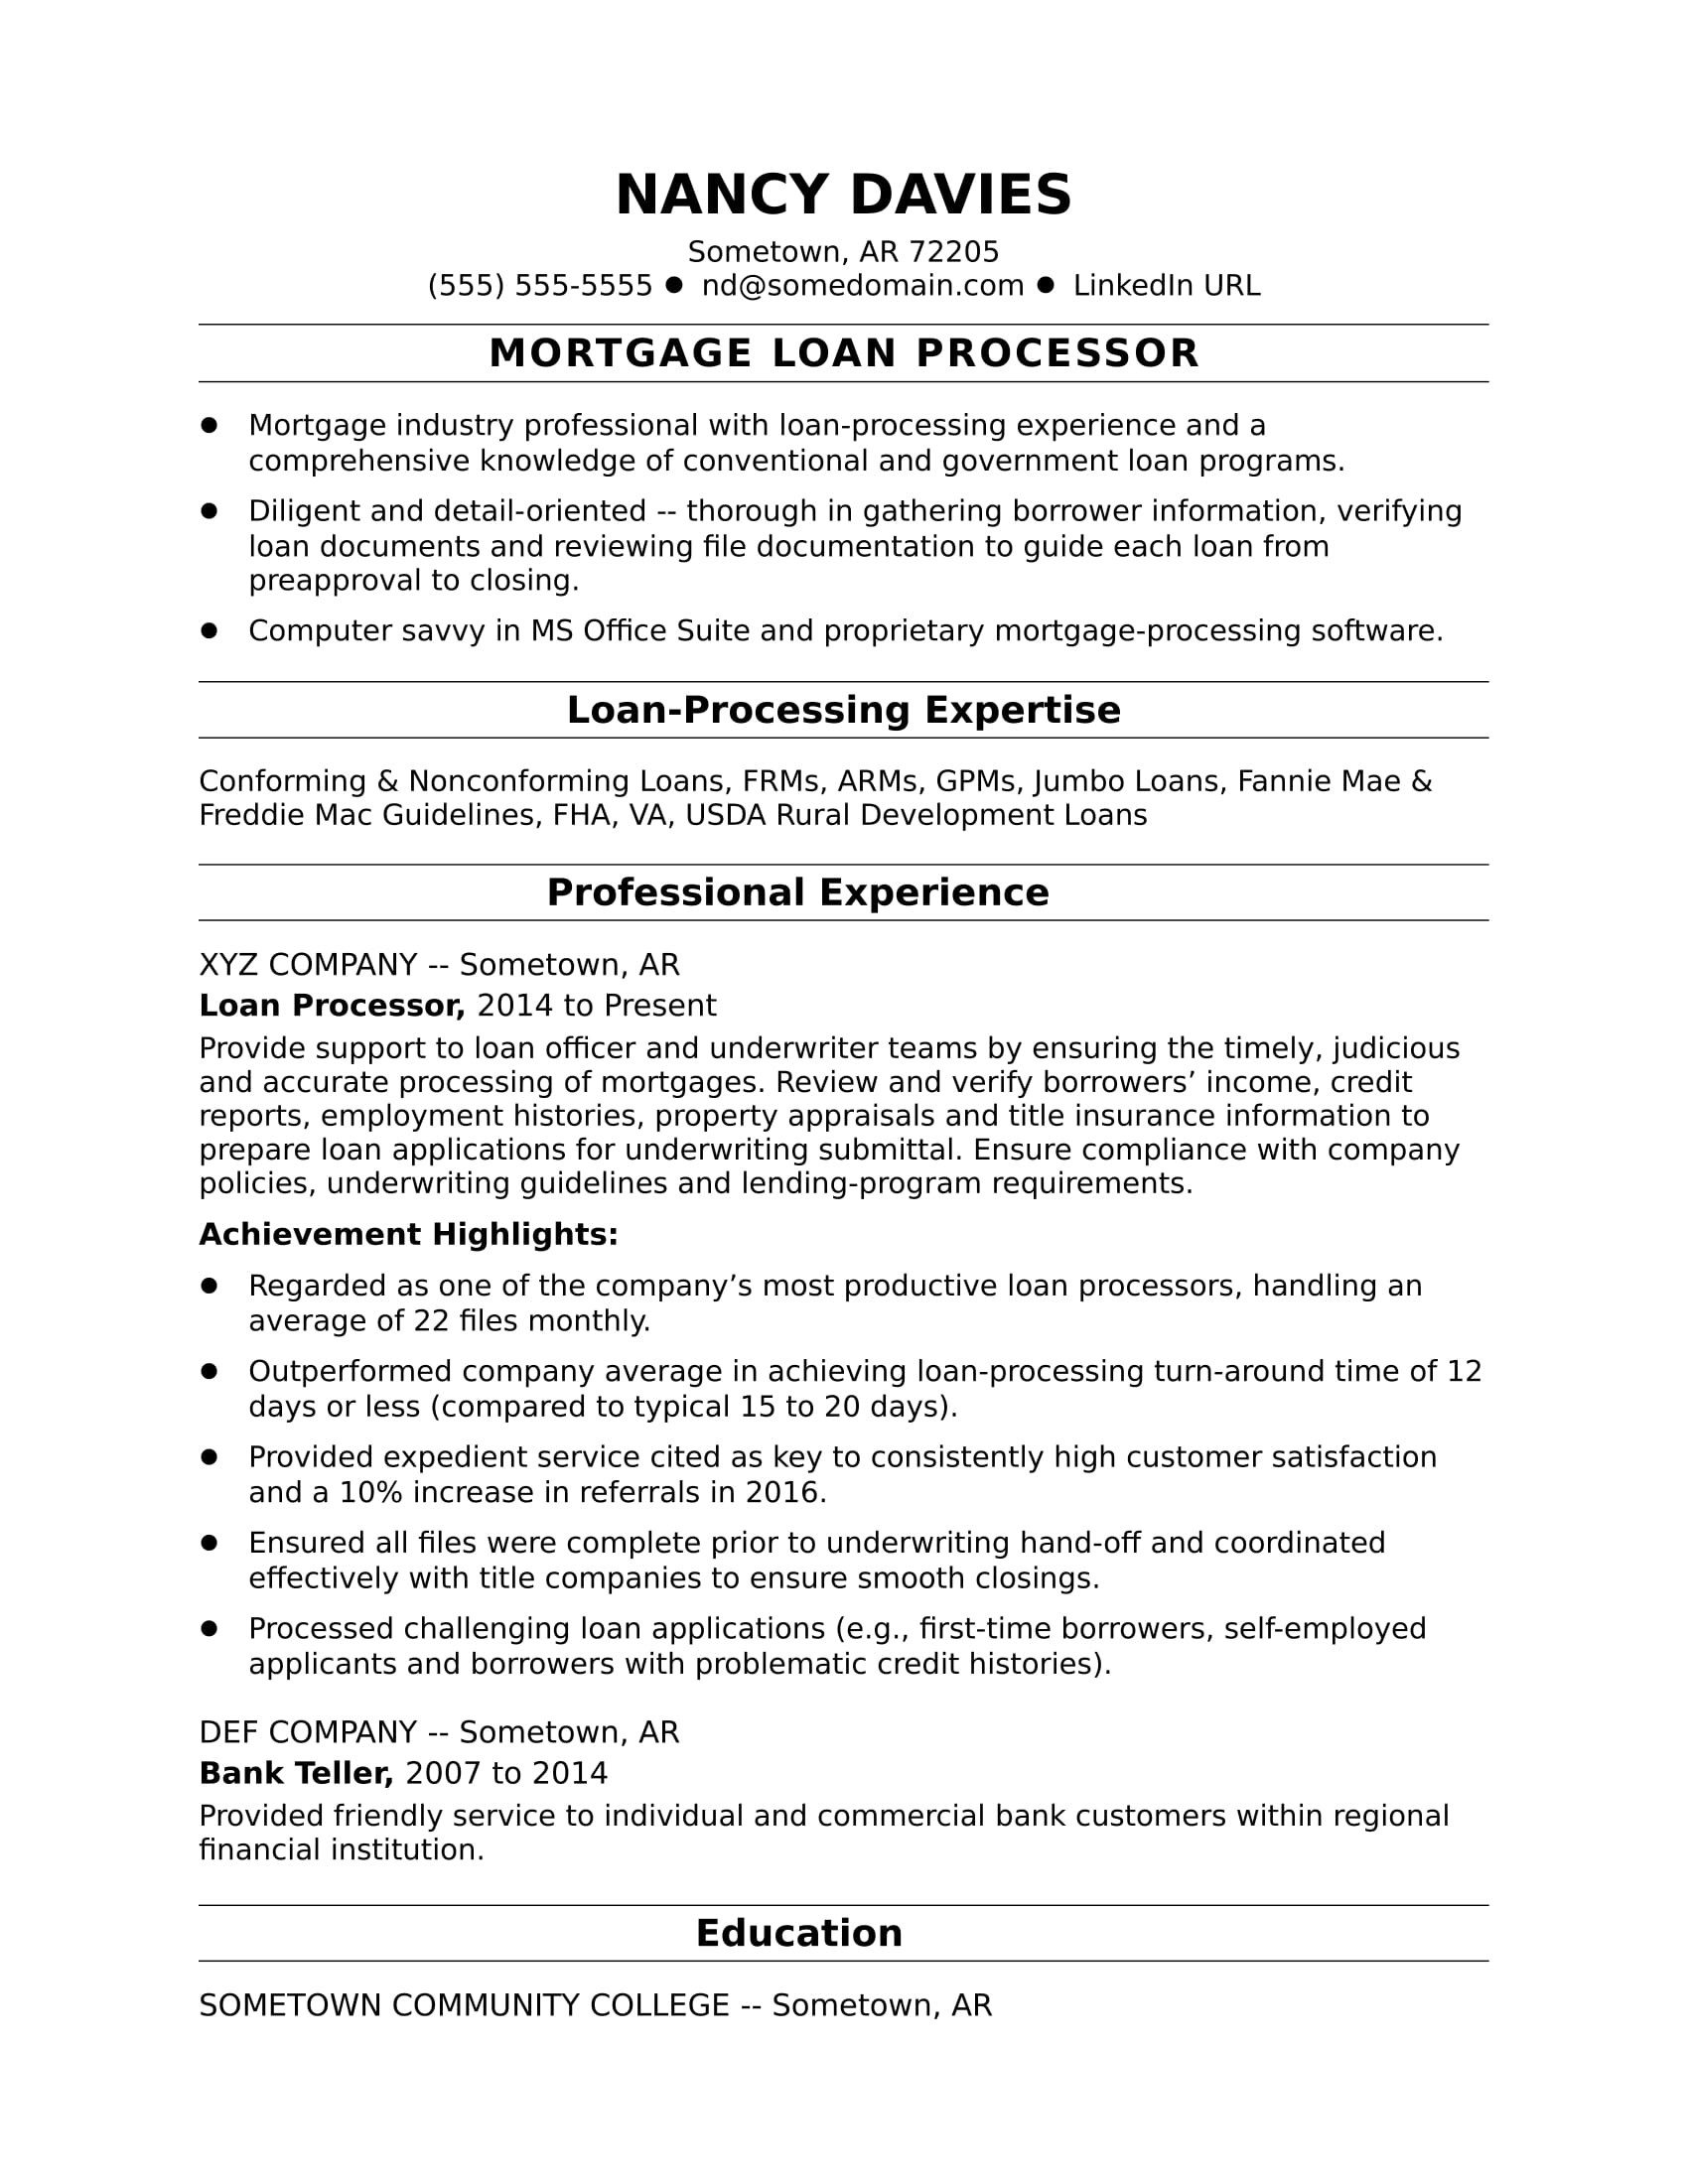 Process Server Resume Best Resume Sample Mortgage Loan Processor Resume Sample Monster.com